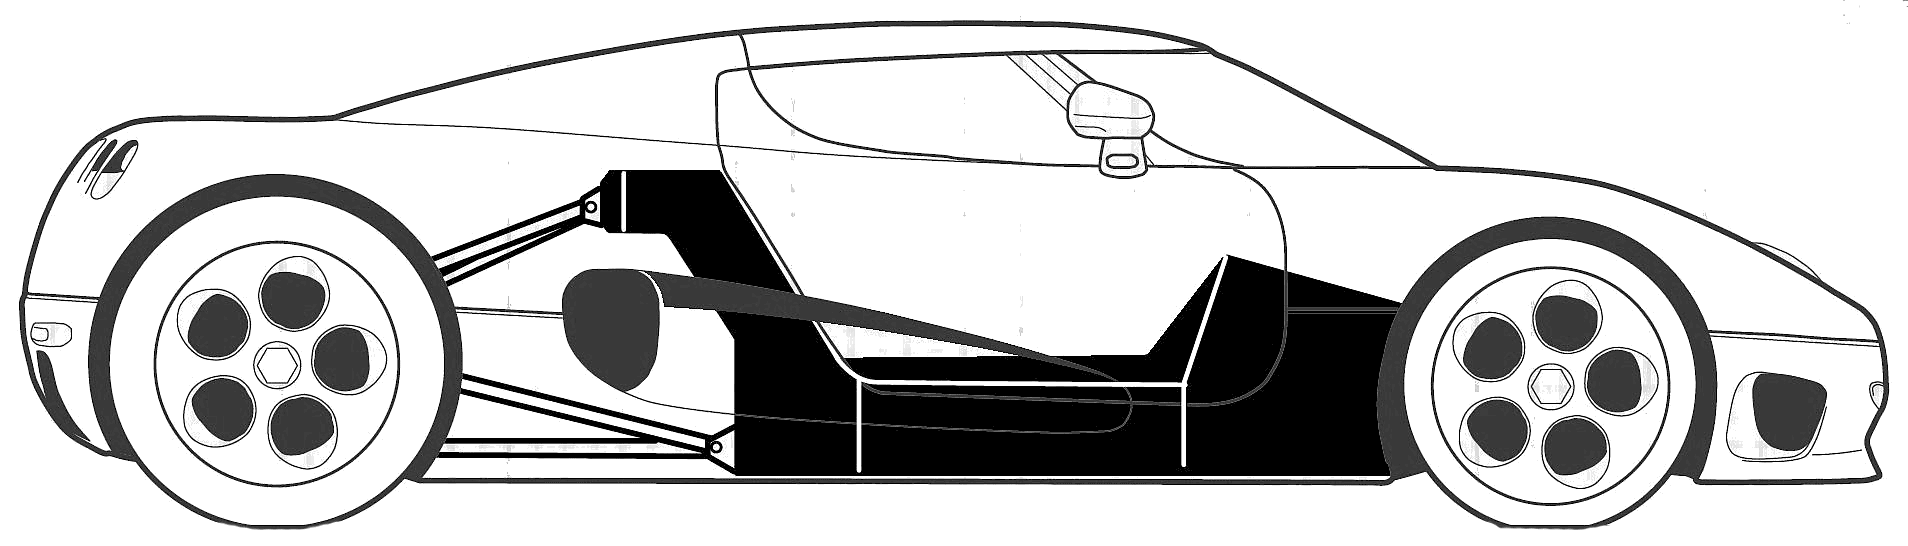 Automobilis Koenigsegg CC 2004